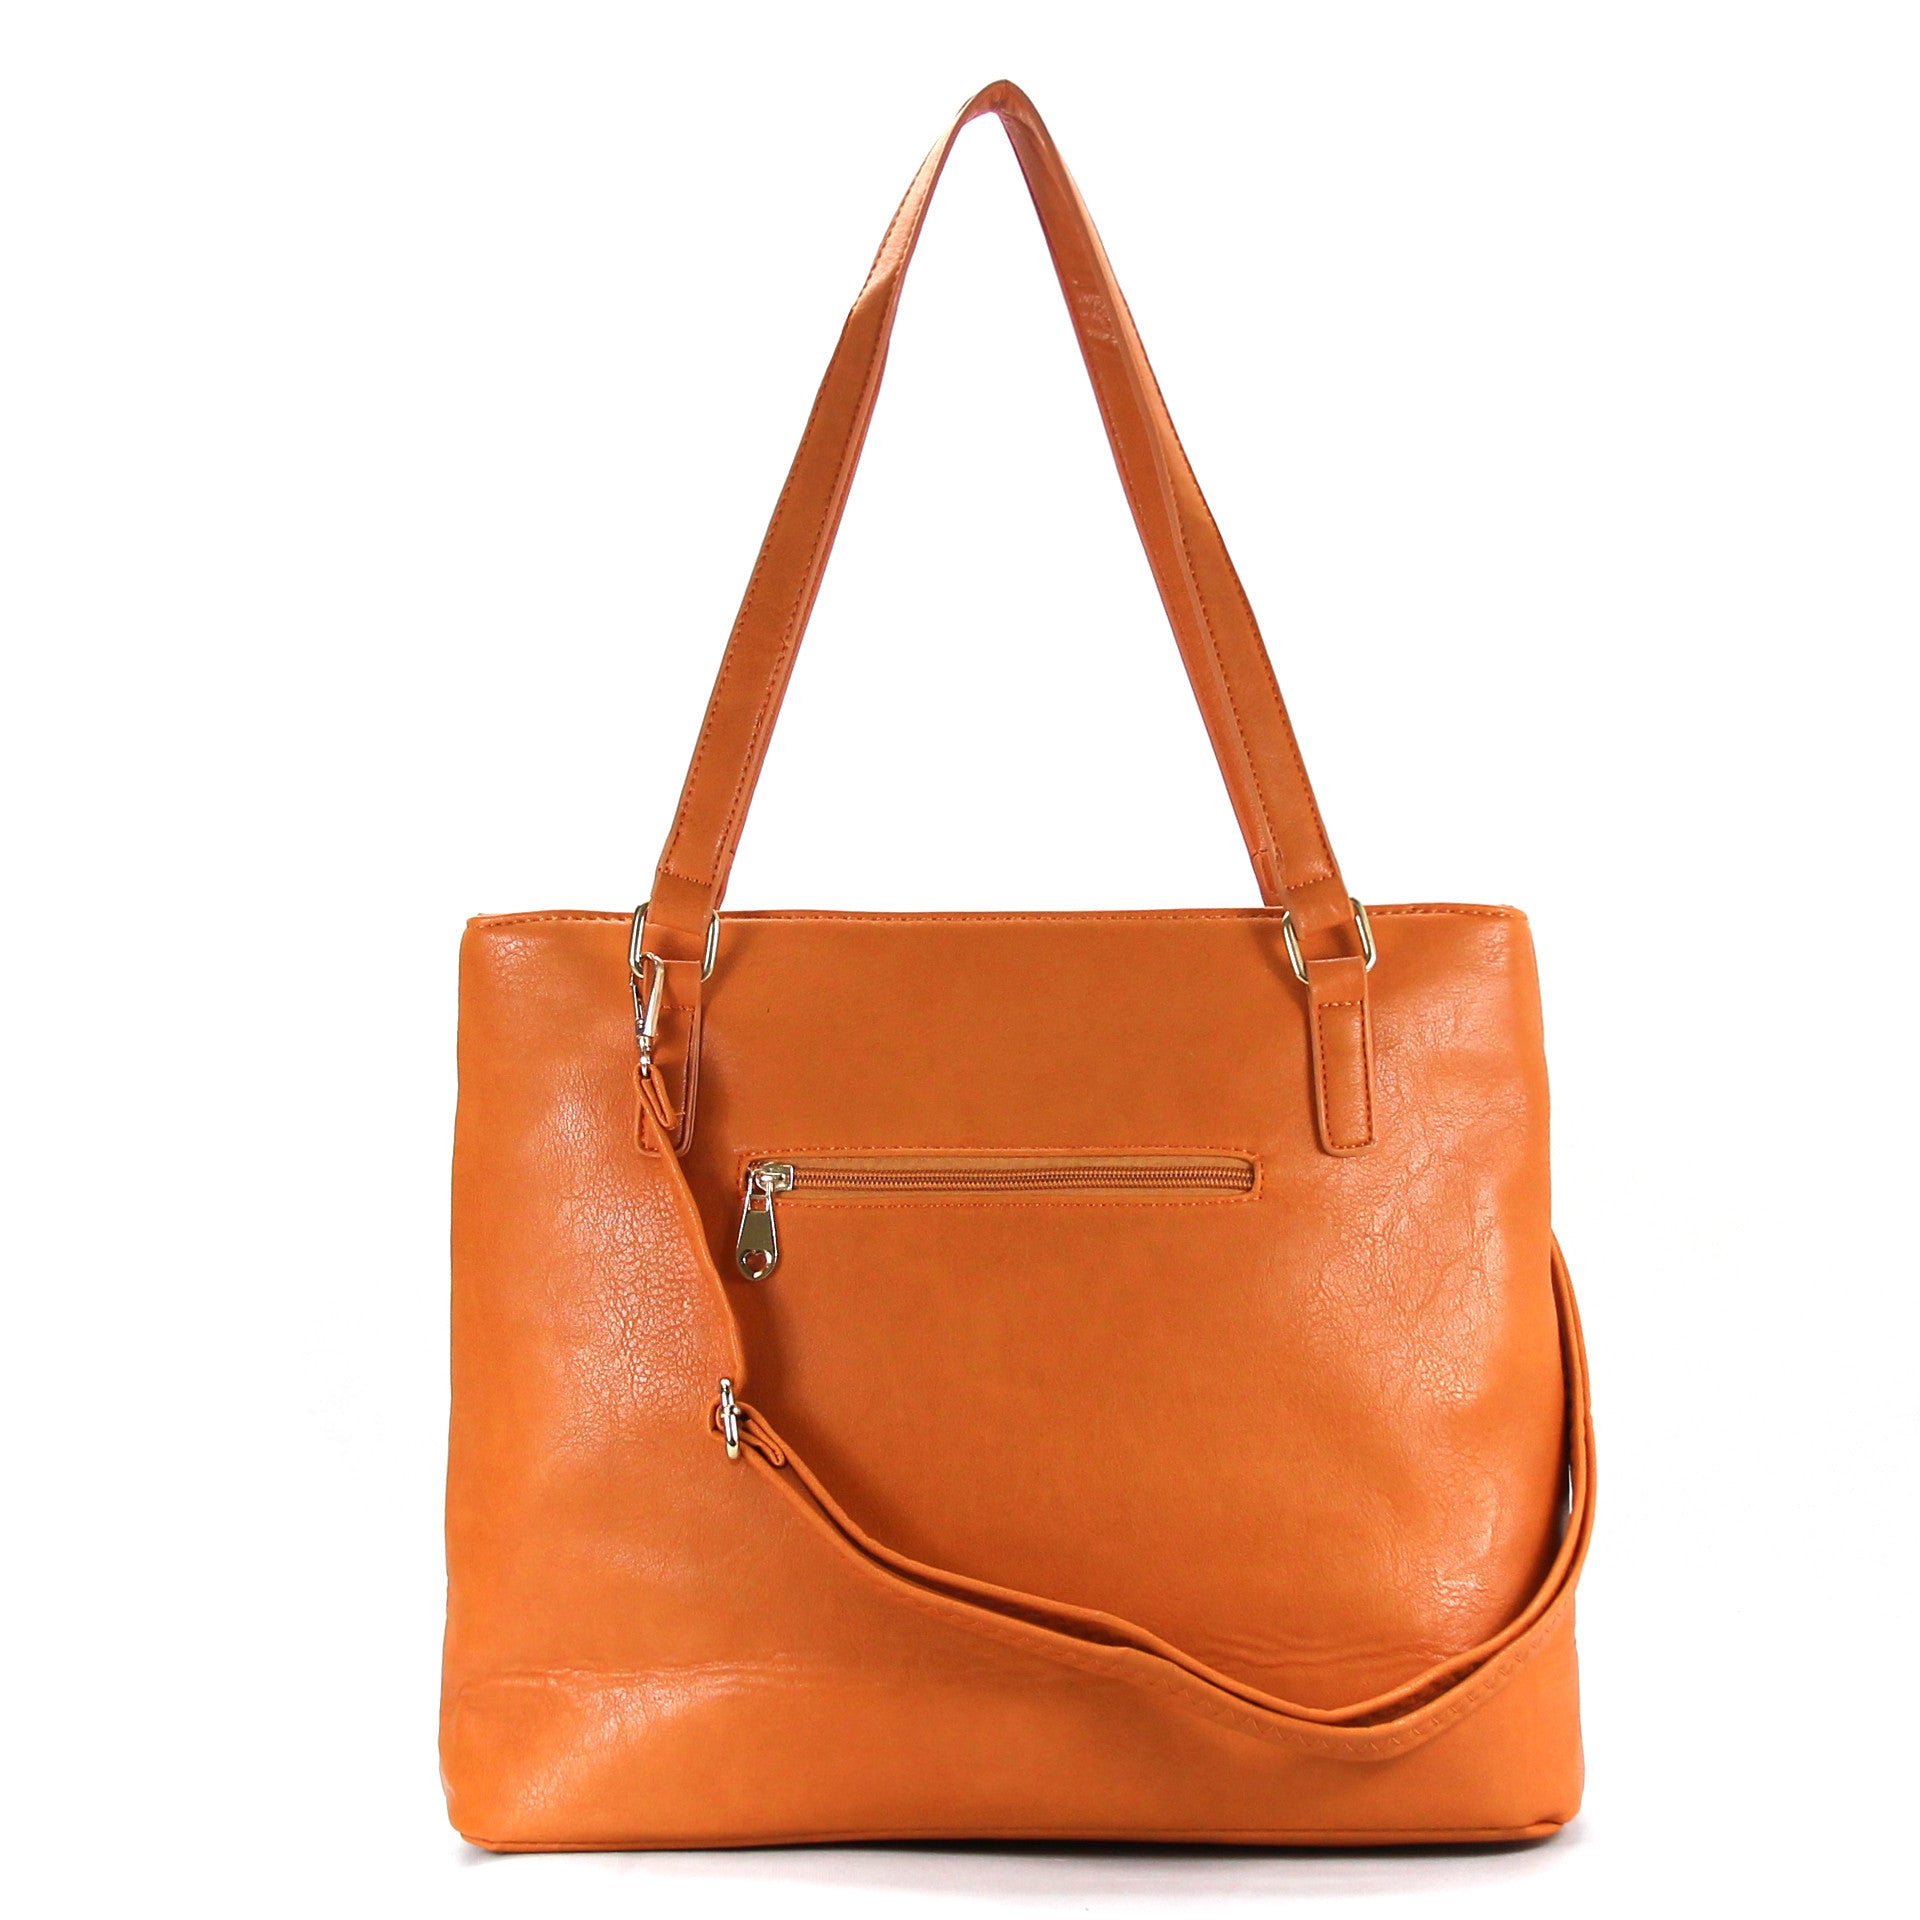 Universal Purse Handbag Tote Bag - Sunrise Saddle - Pop Fashion